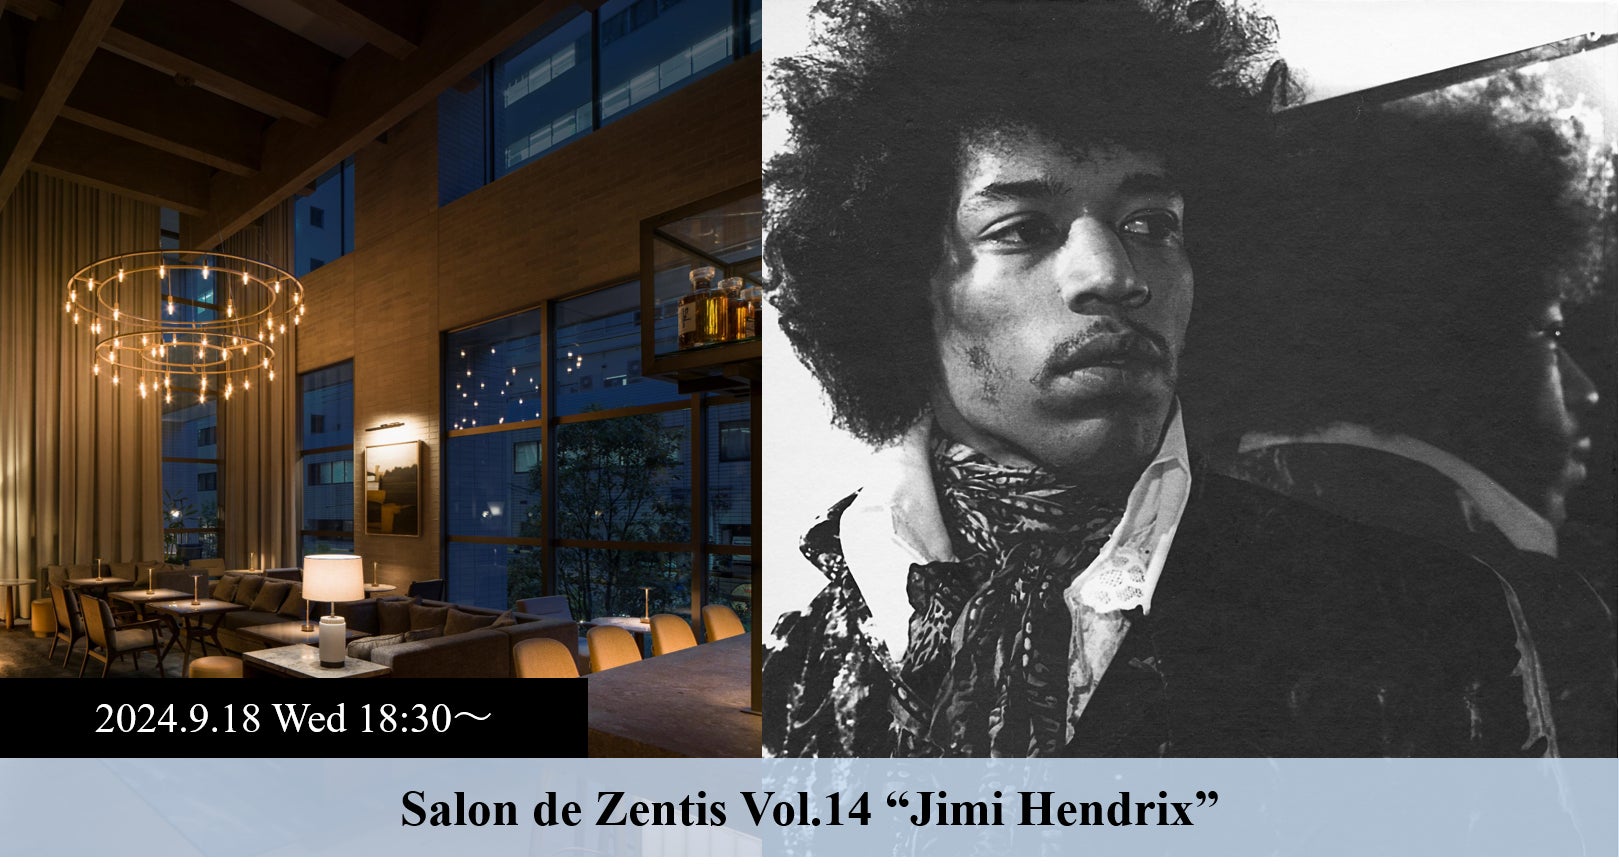 「Salon de Zentis」Vol. 14 “Jimi Hendrix”